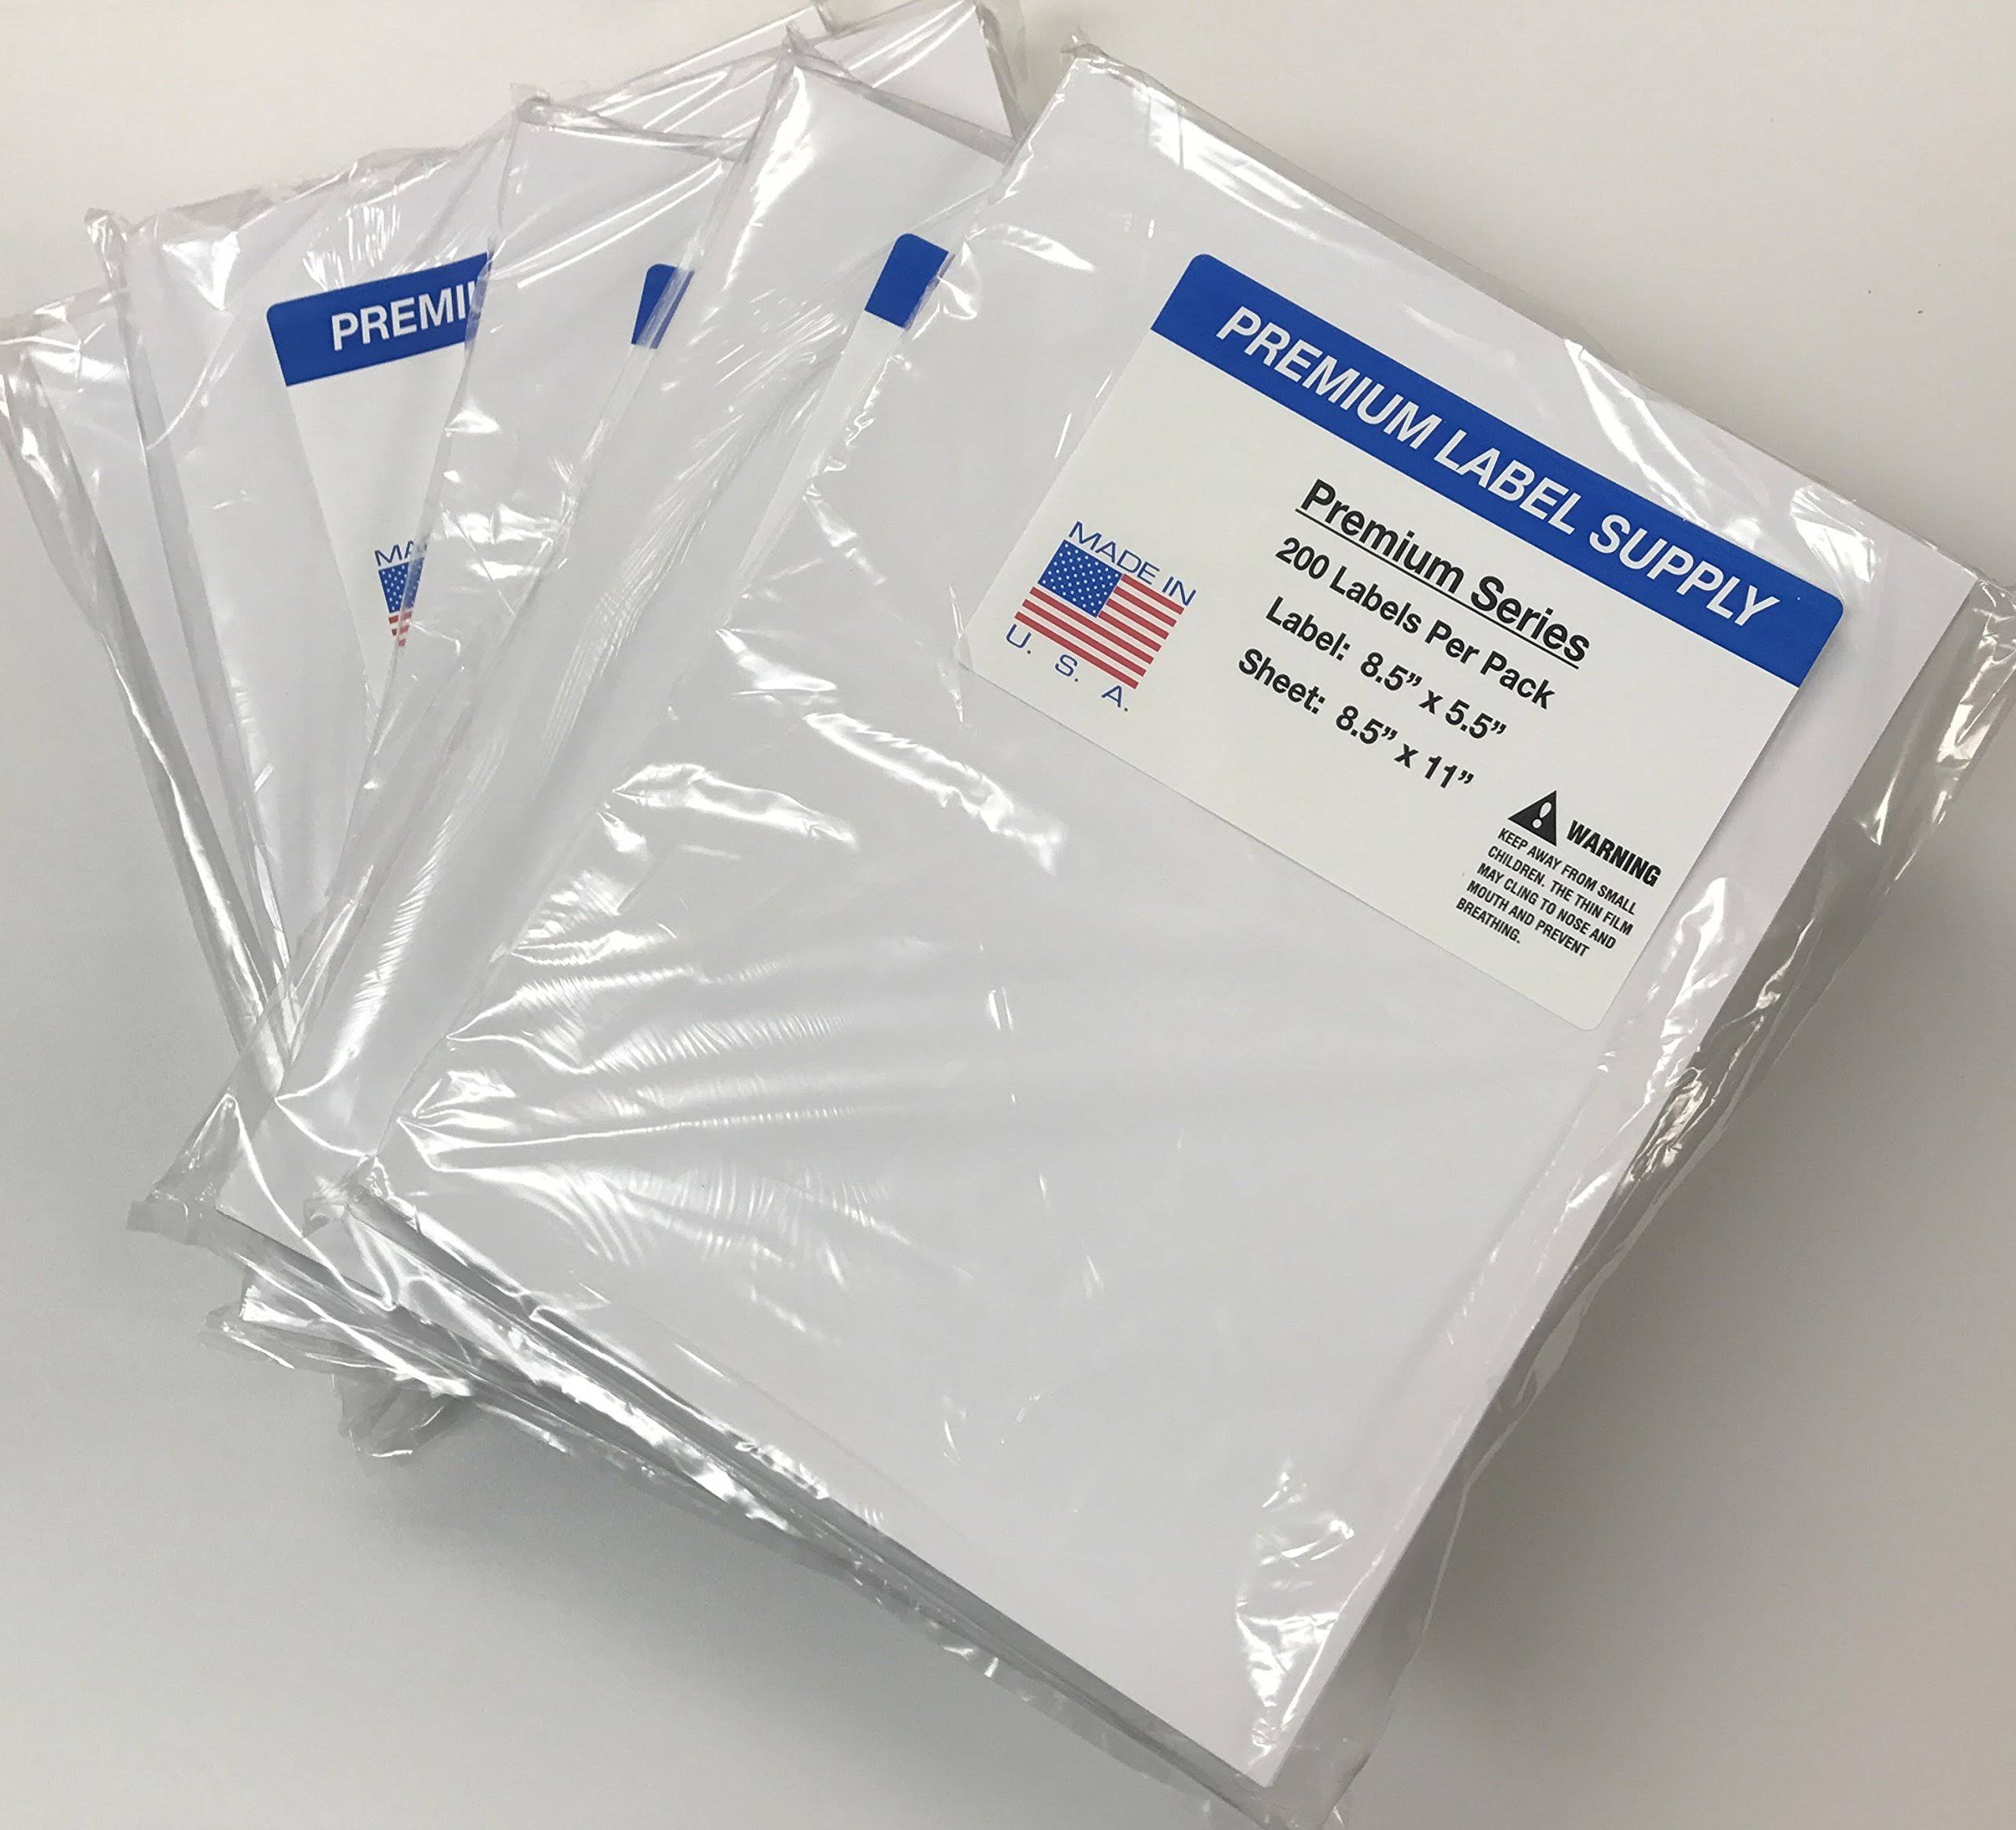 Premium Label Supply 8.5 x 5.5" Half Sheet Self Adhesive Shipping